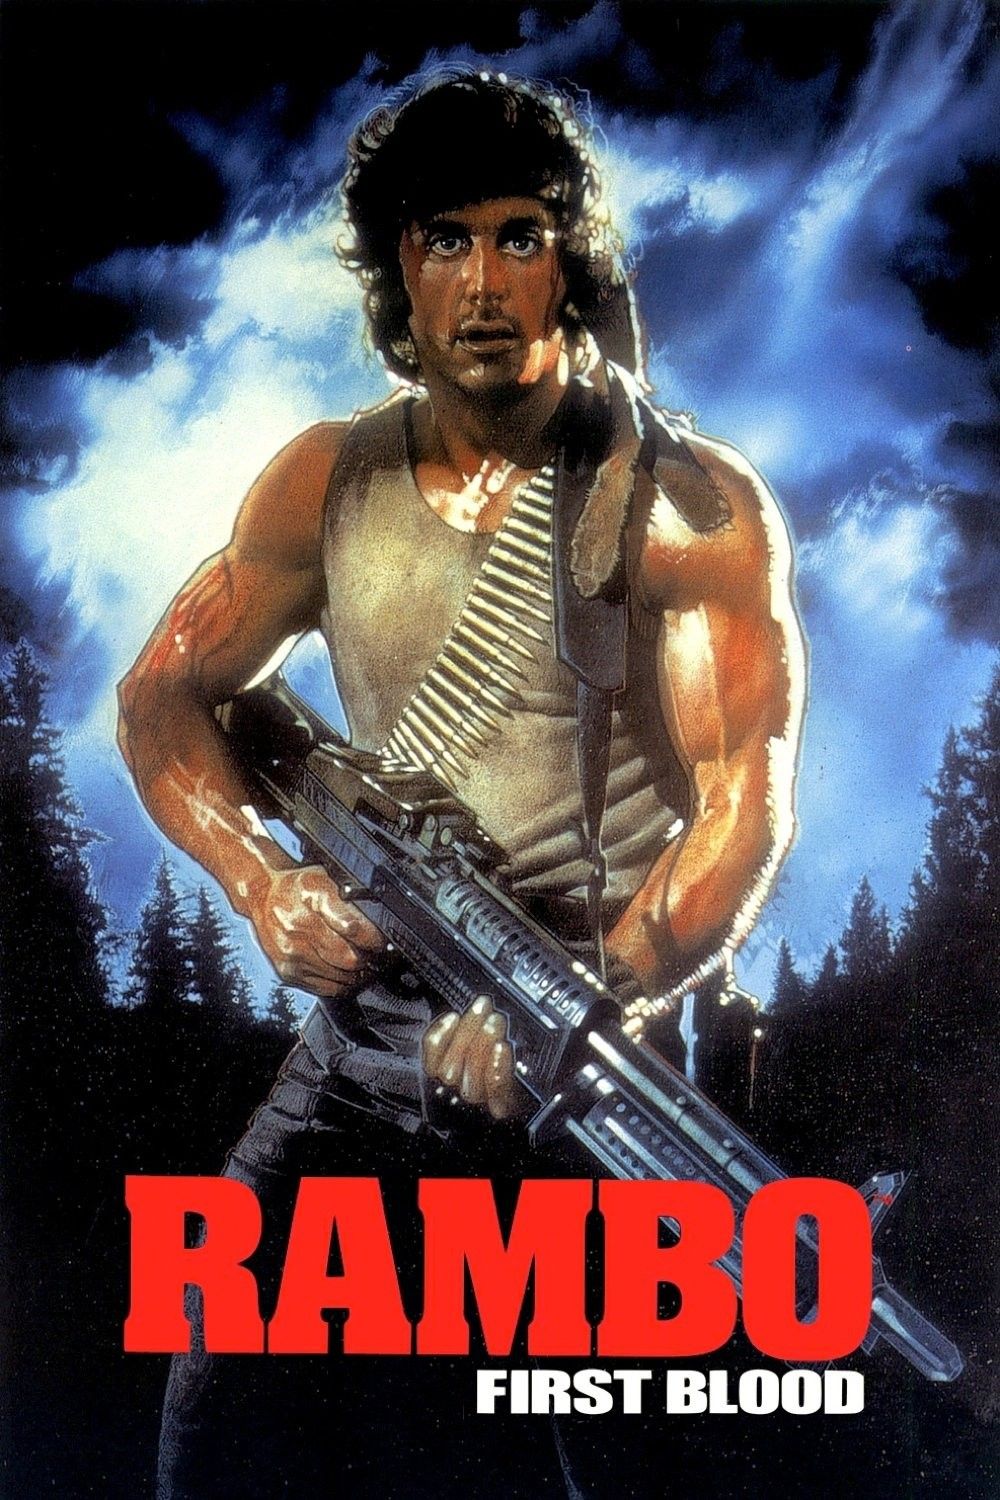 Rambo anecdotes cinema